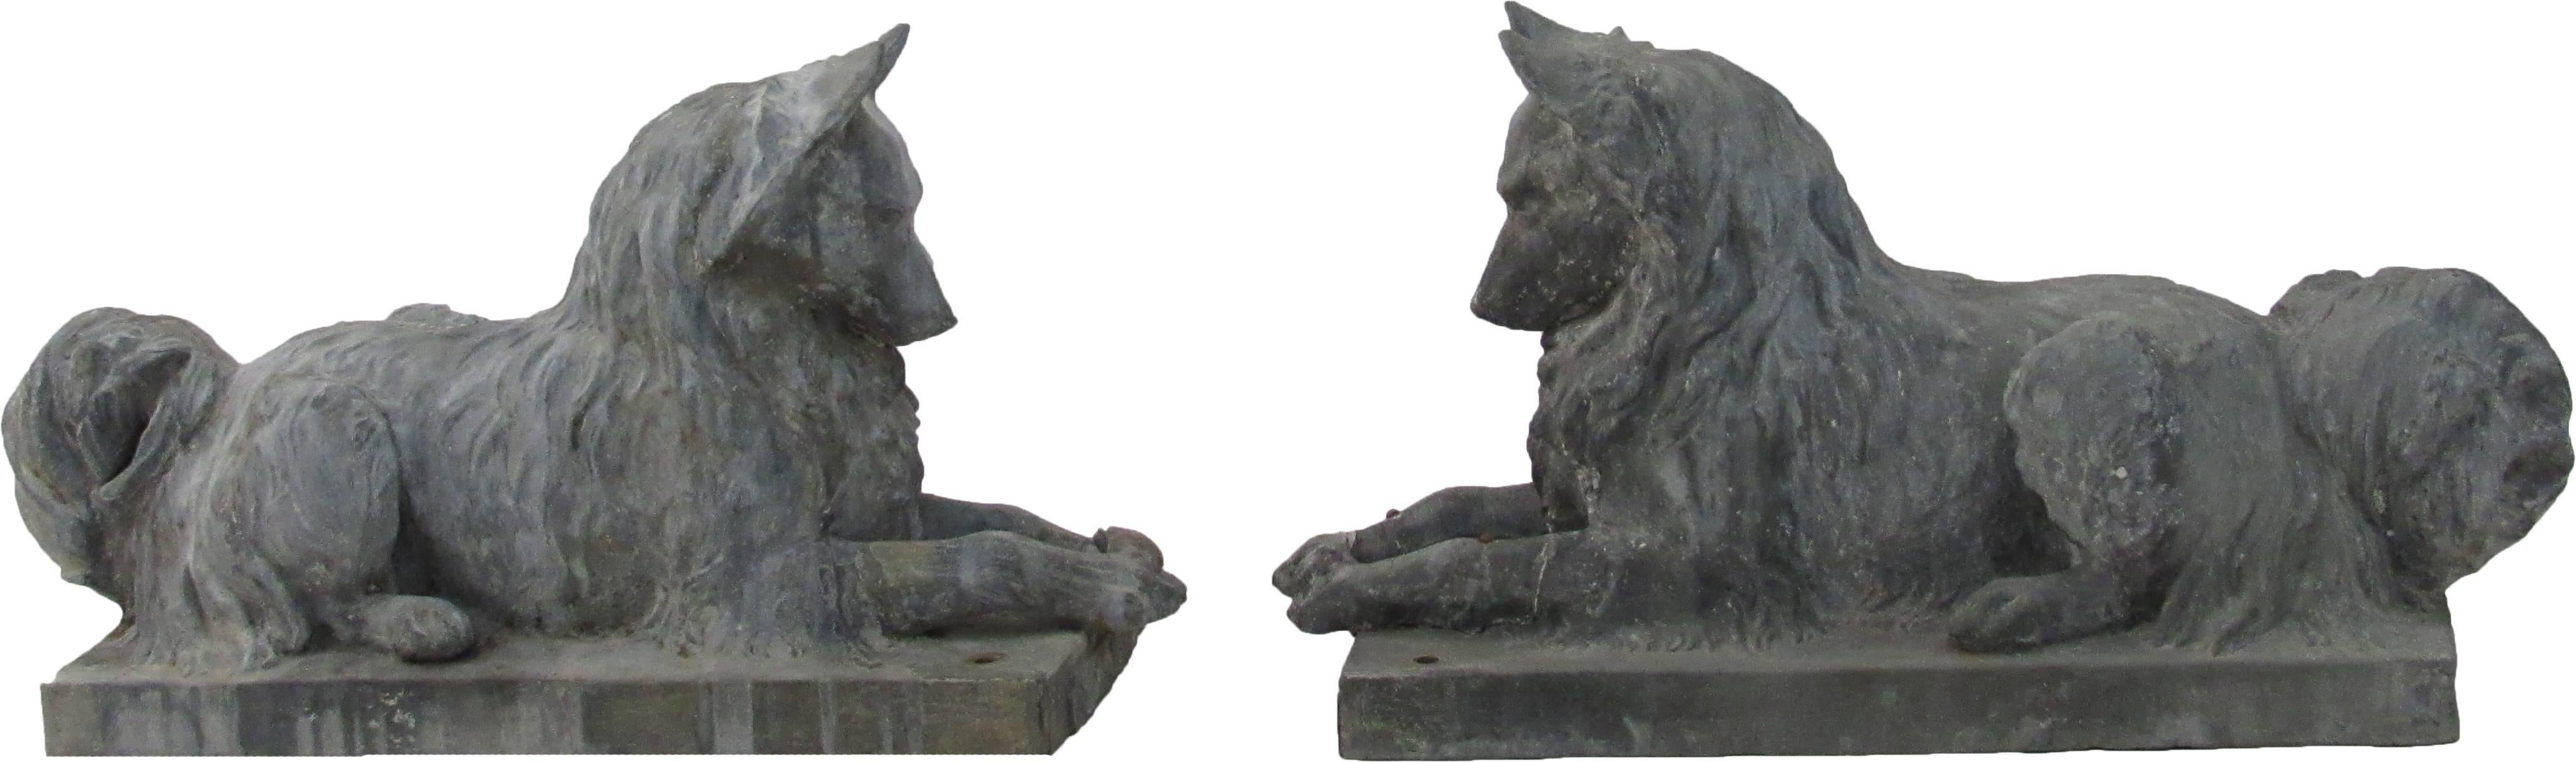 Pair of 19th century zinc dog sculptures.